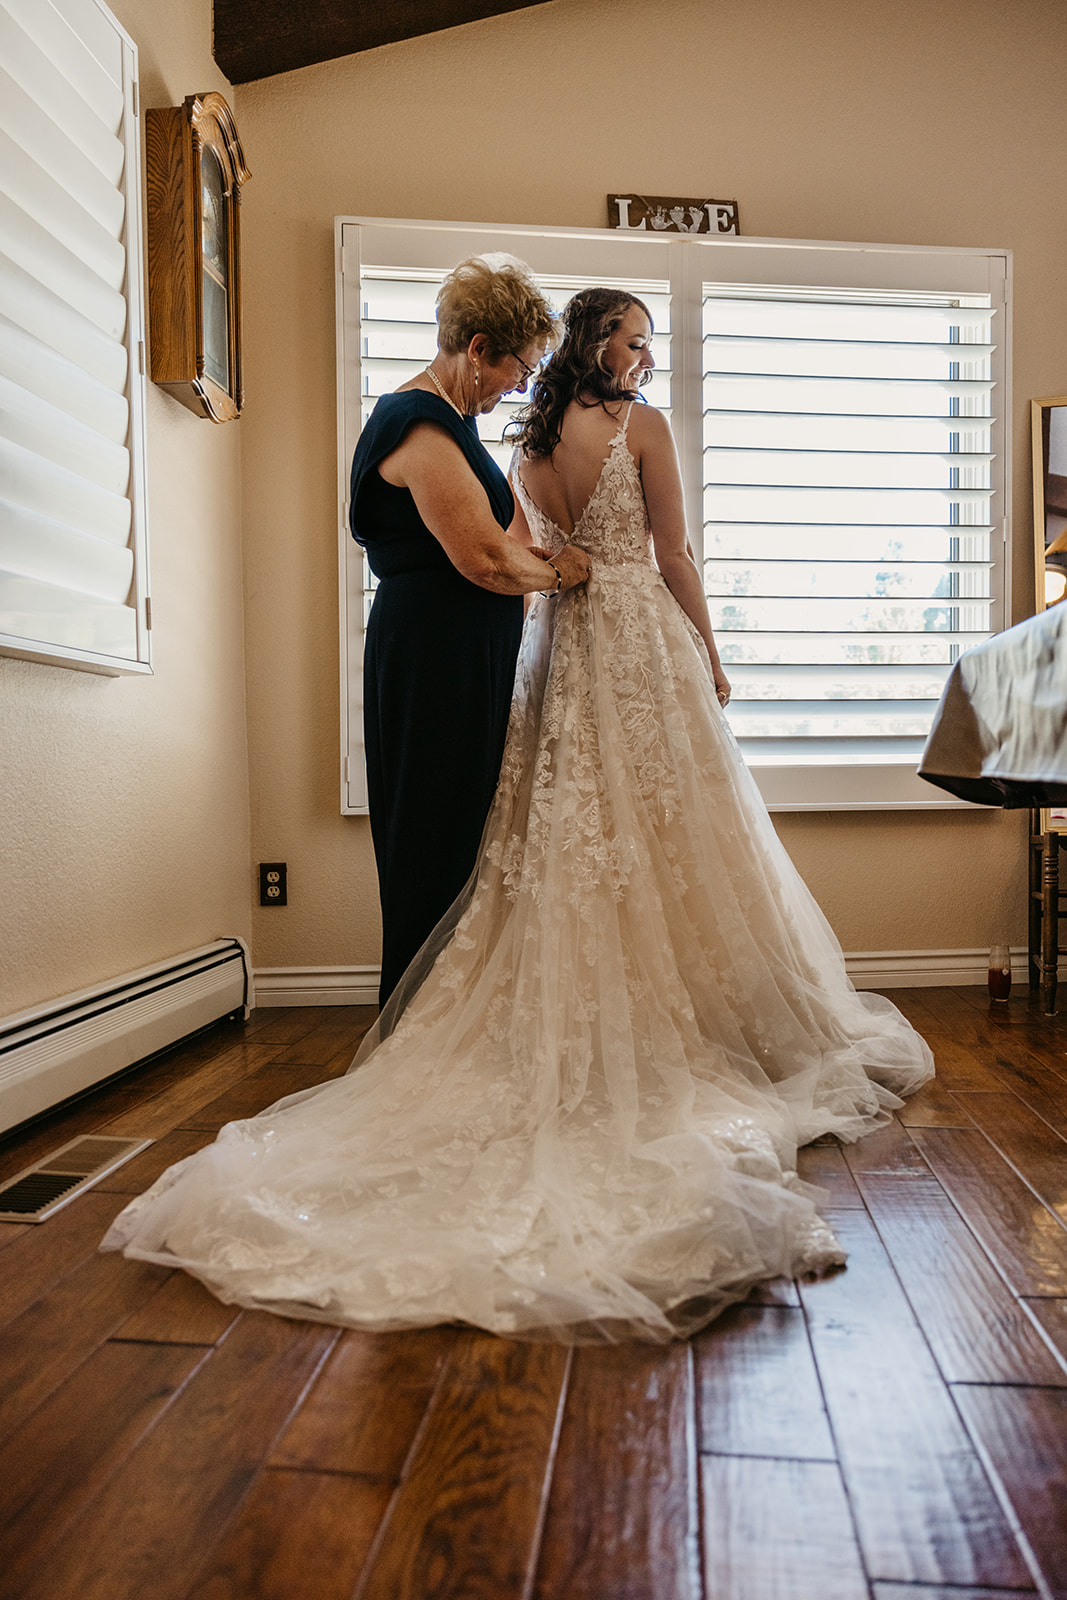 Bride's mom helps button up her wedding dress